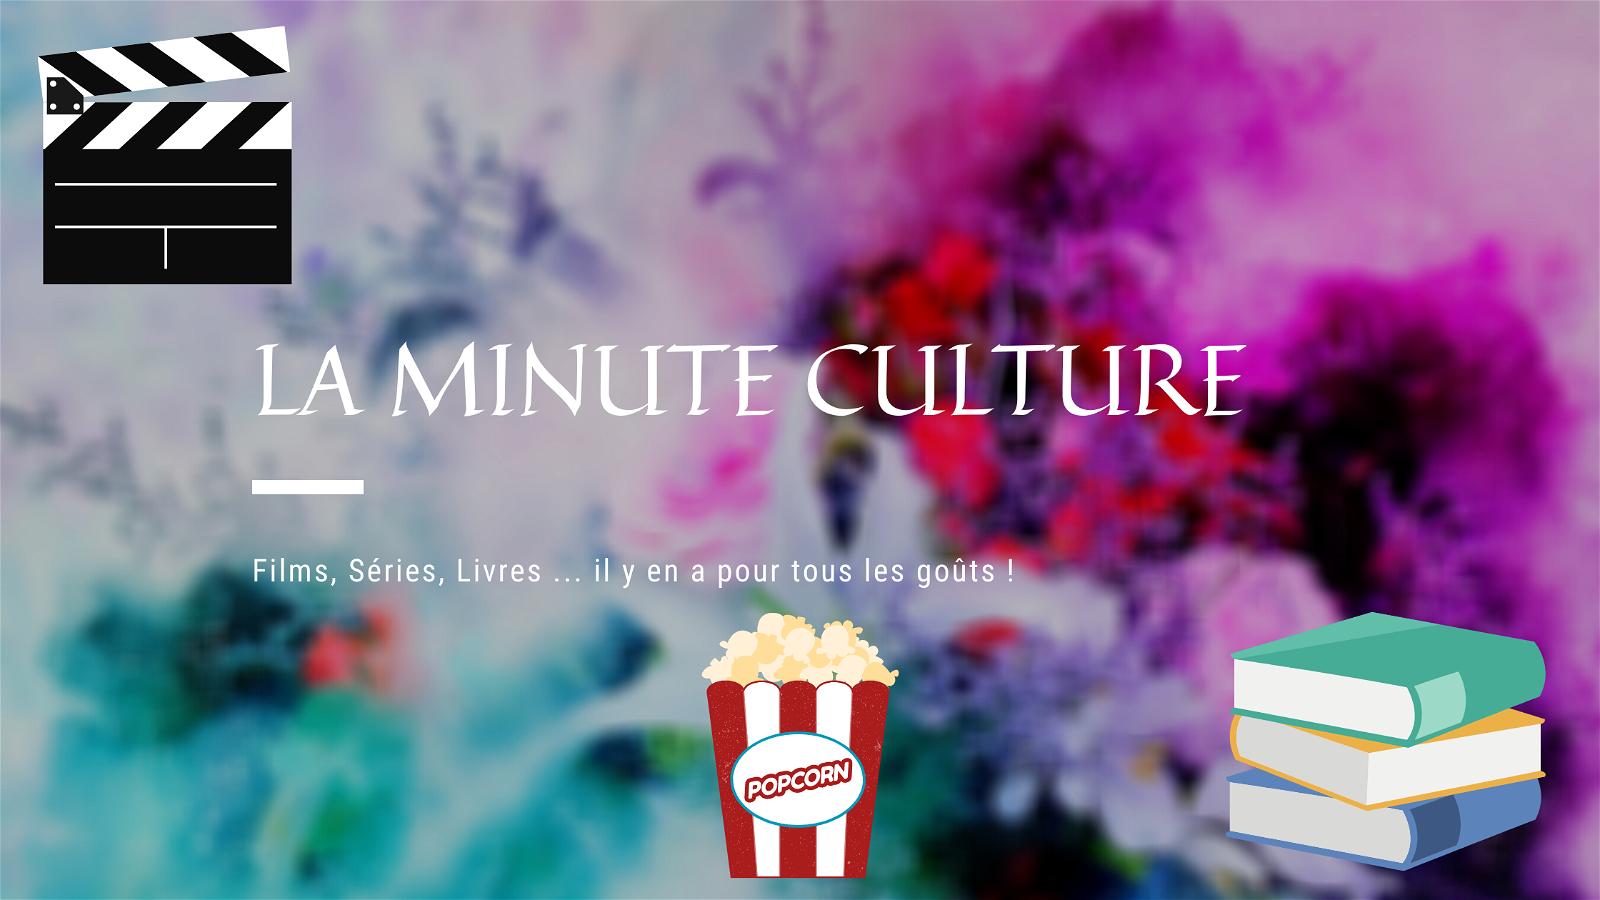 La minute culture - épisode 9